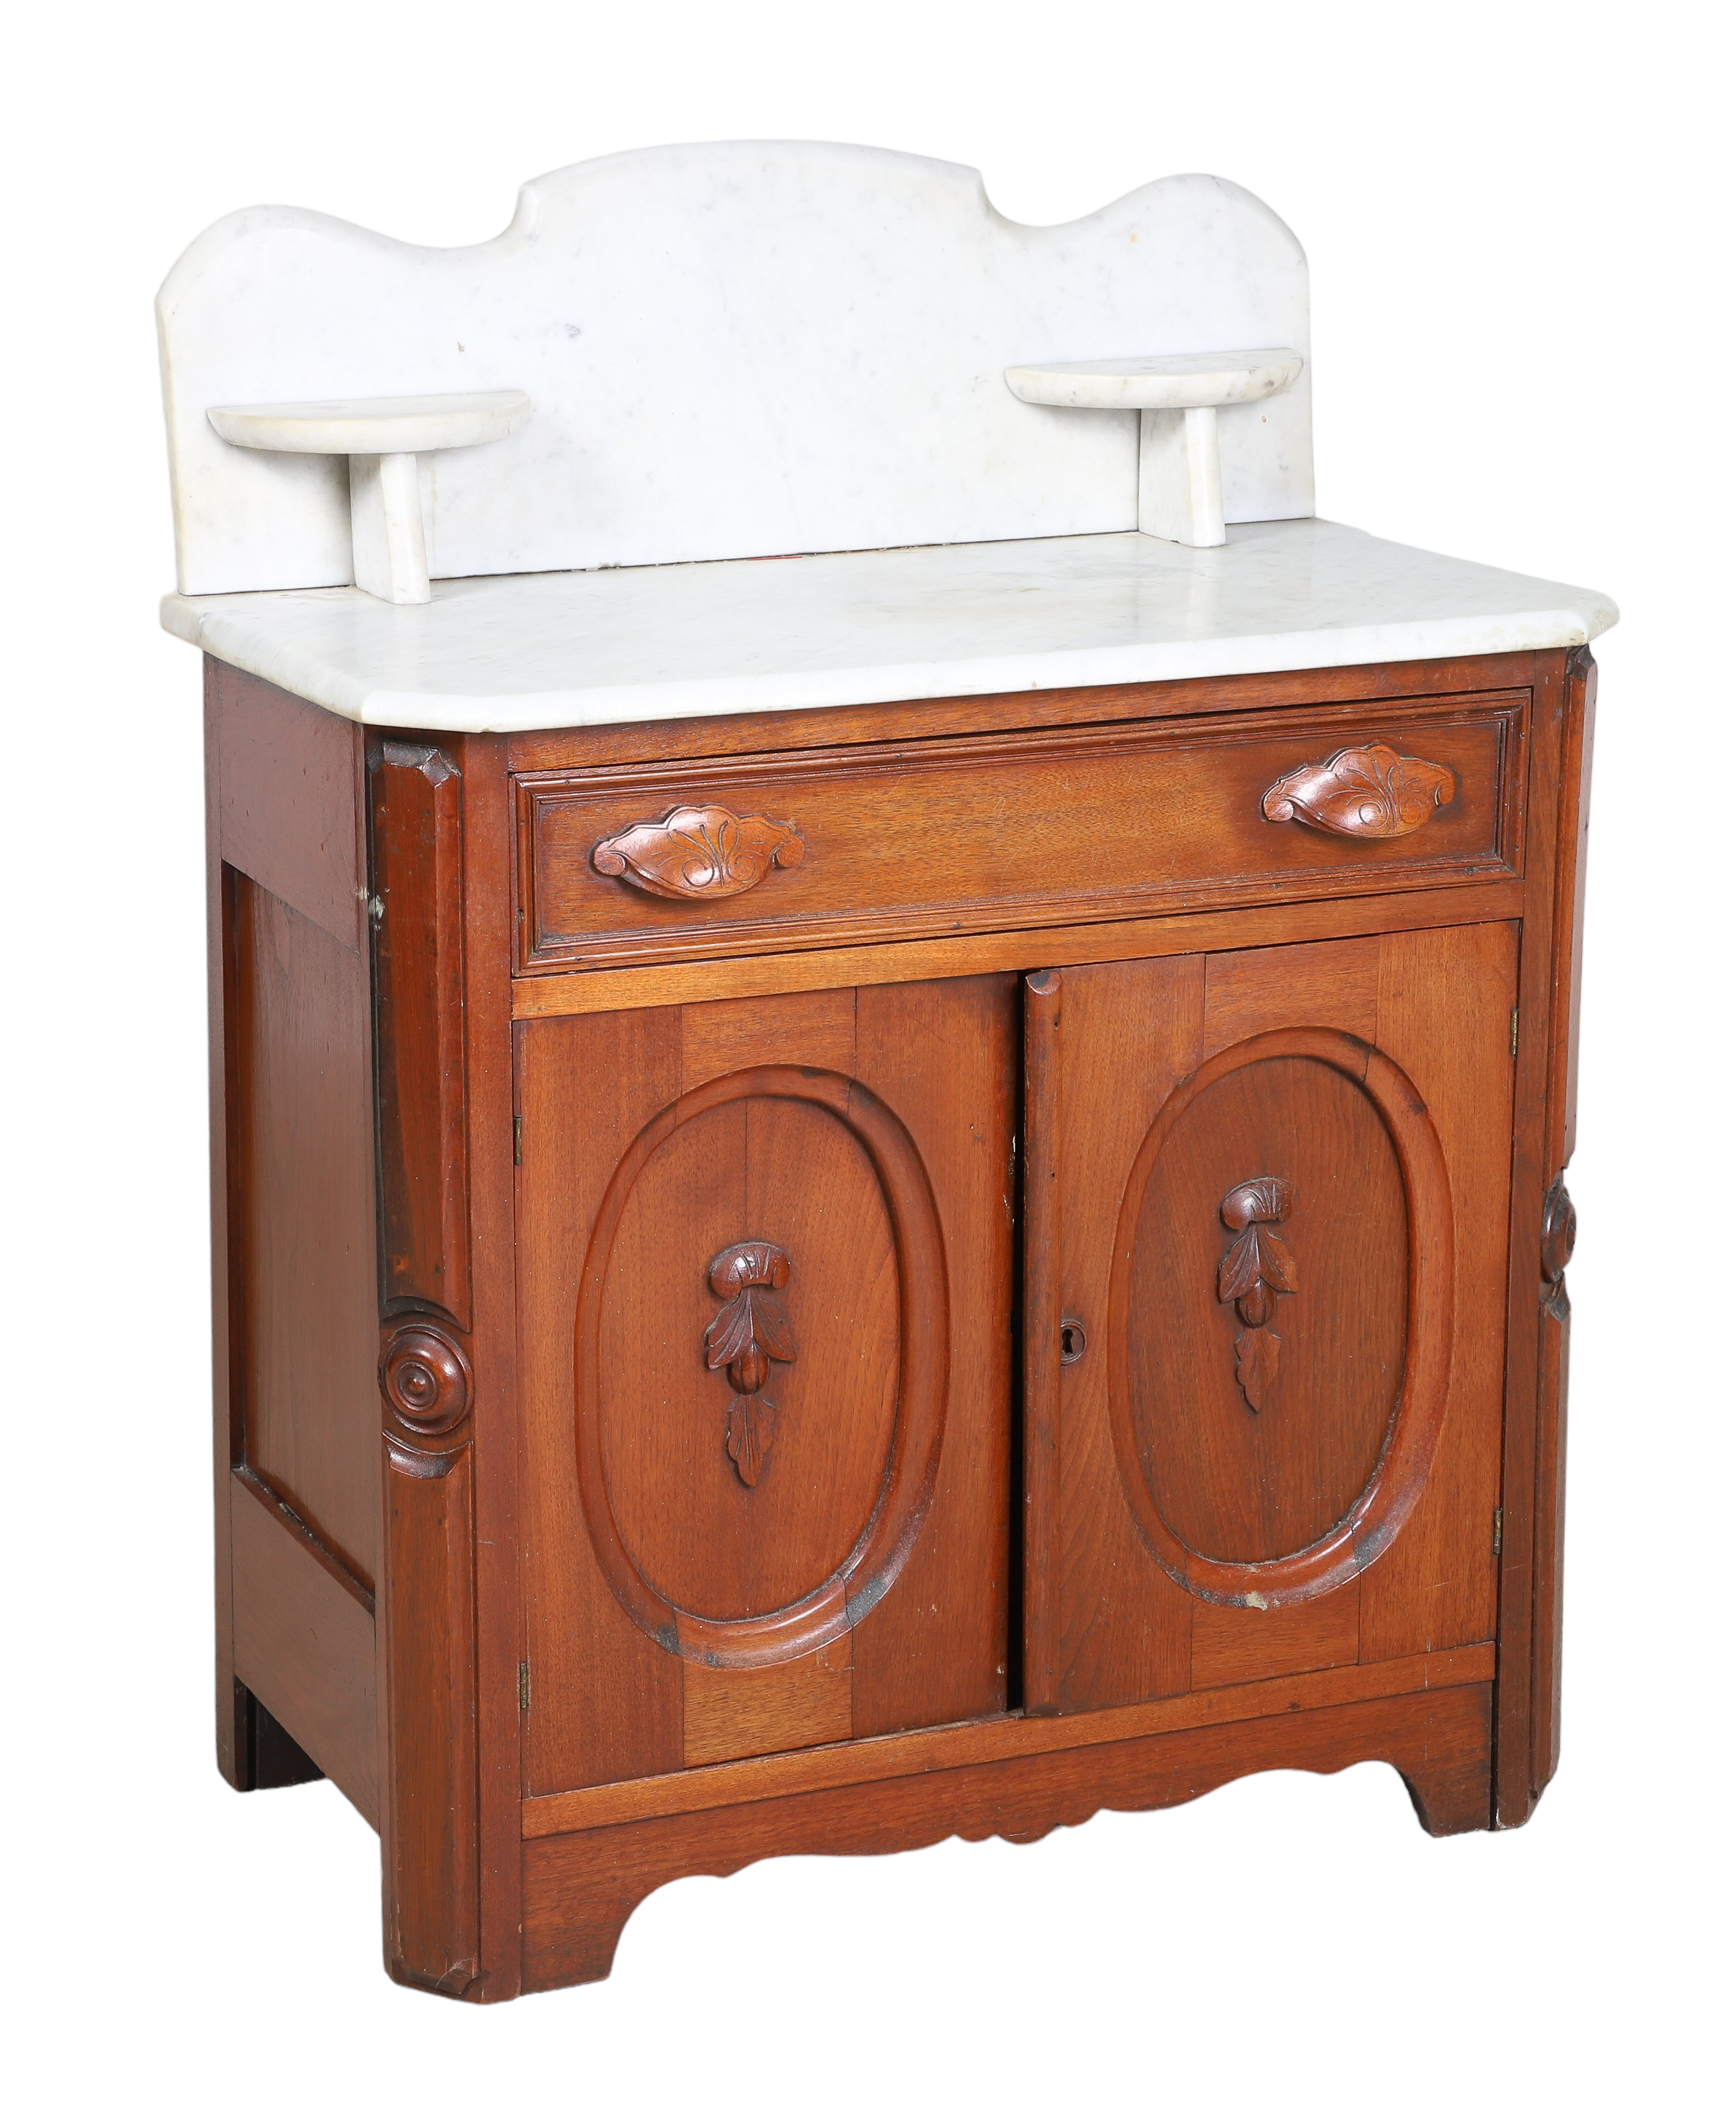 Victorian marbletop washstand, single